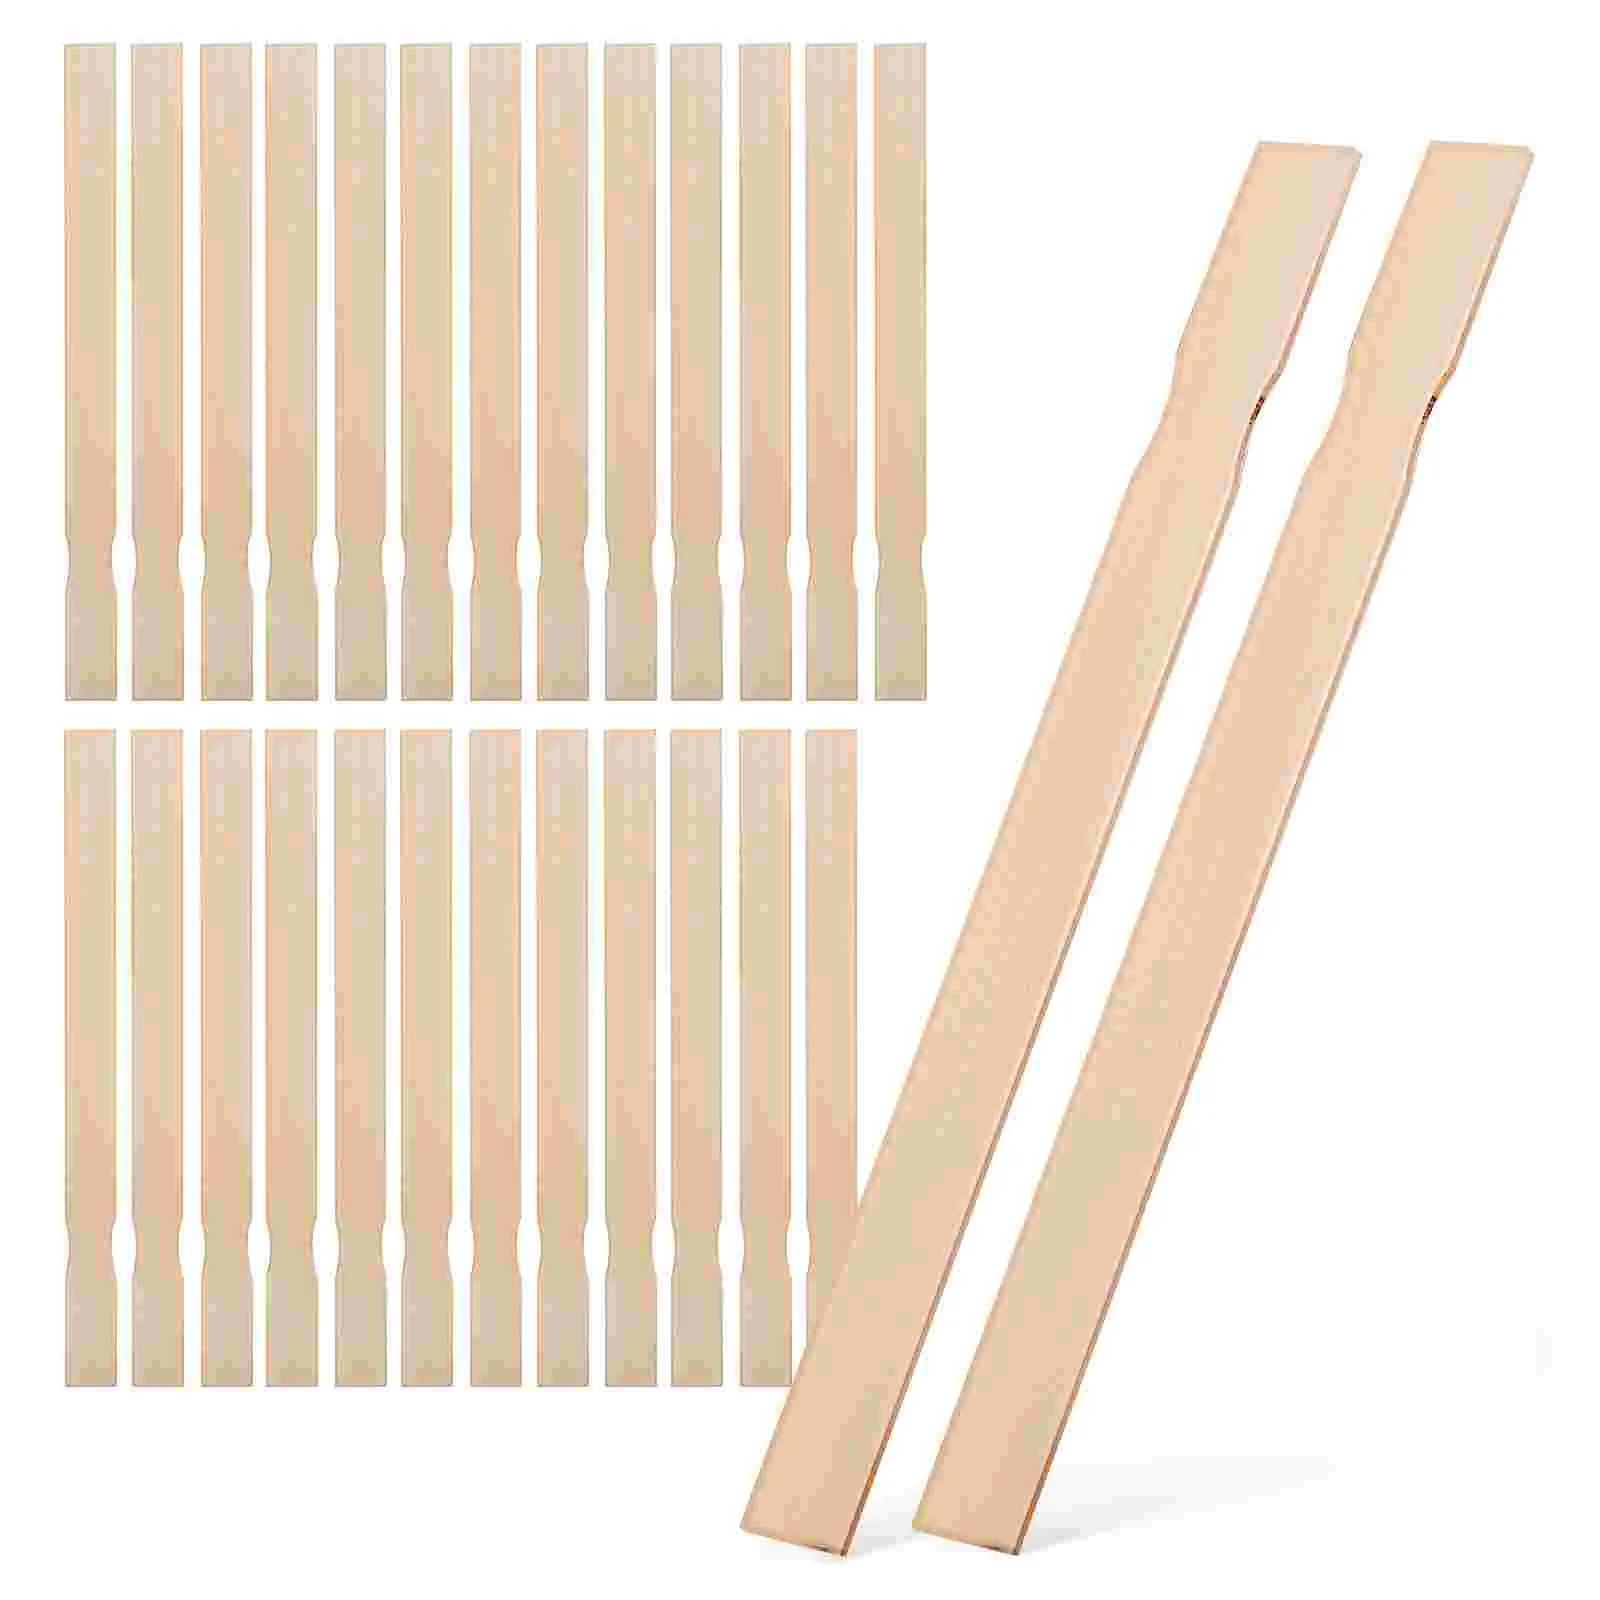 

25 Pcs Wood Strips Wooden Rod Stir Sticks DIY Handmade Materials Bar Paint Stirrer Stirring Stirrers